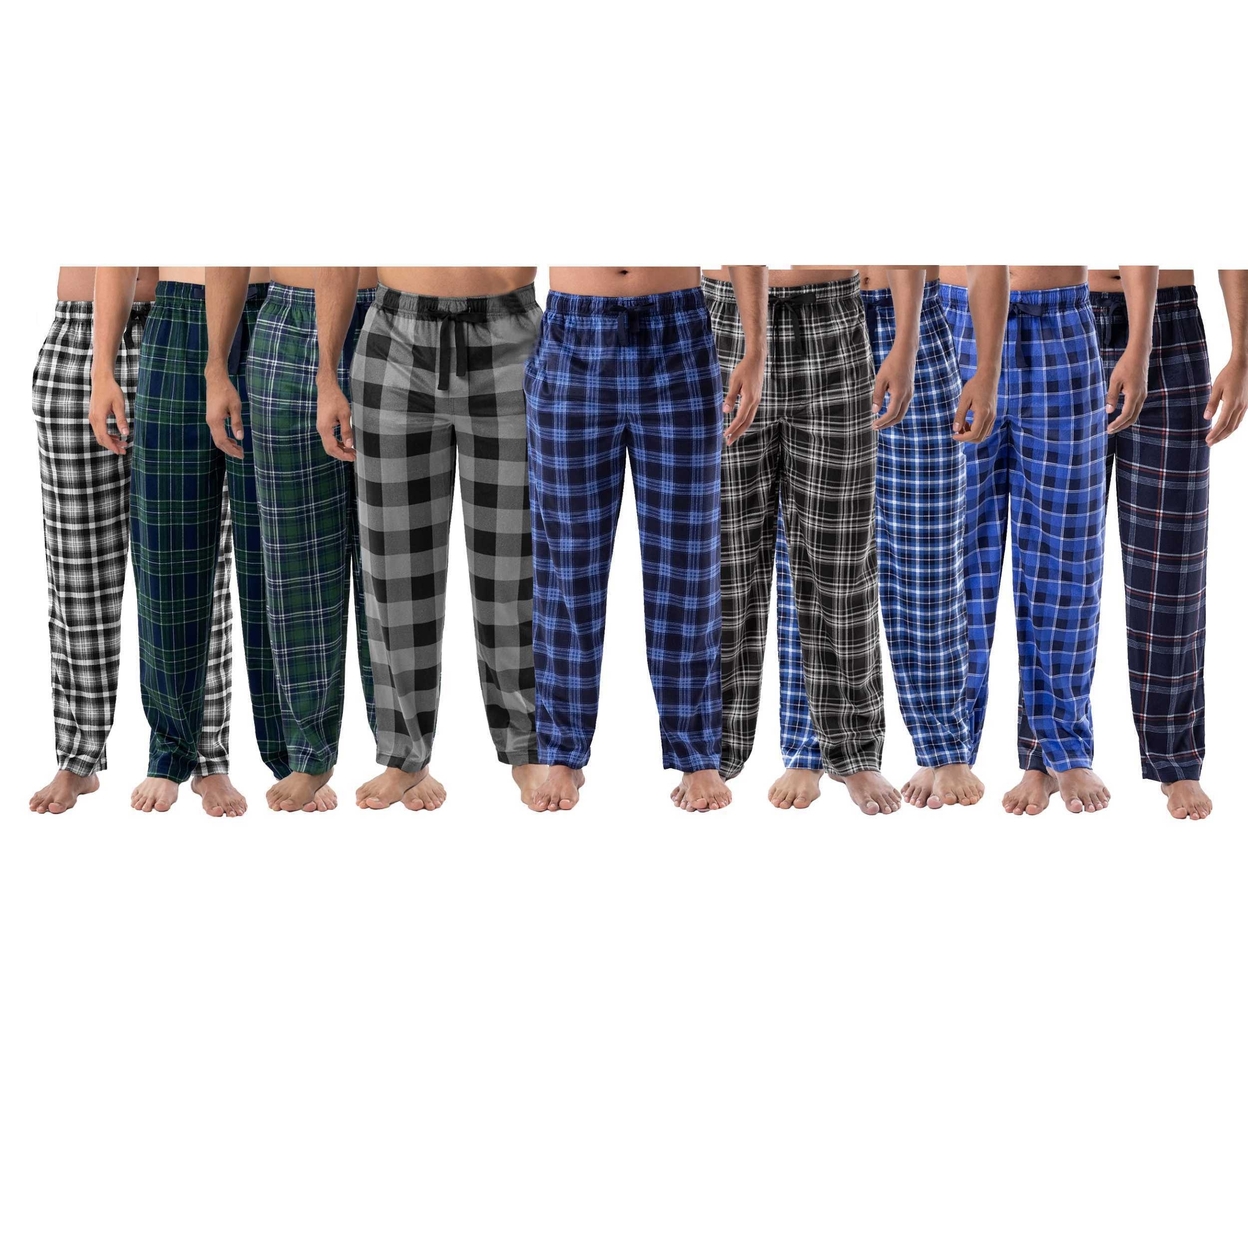 4-Pack: Men's Ultra-Soft Cozy Lounge Sleep Micro Fleece Plaid Pajama Pants - Xx-large